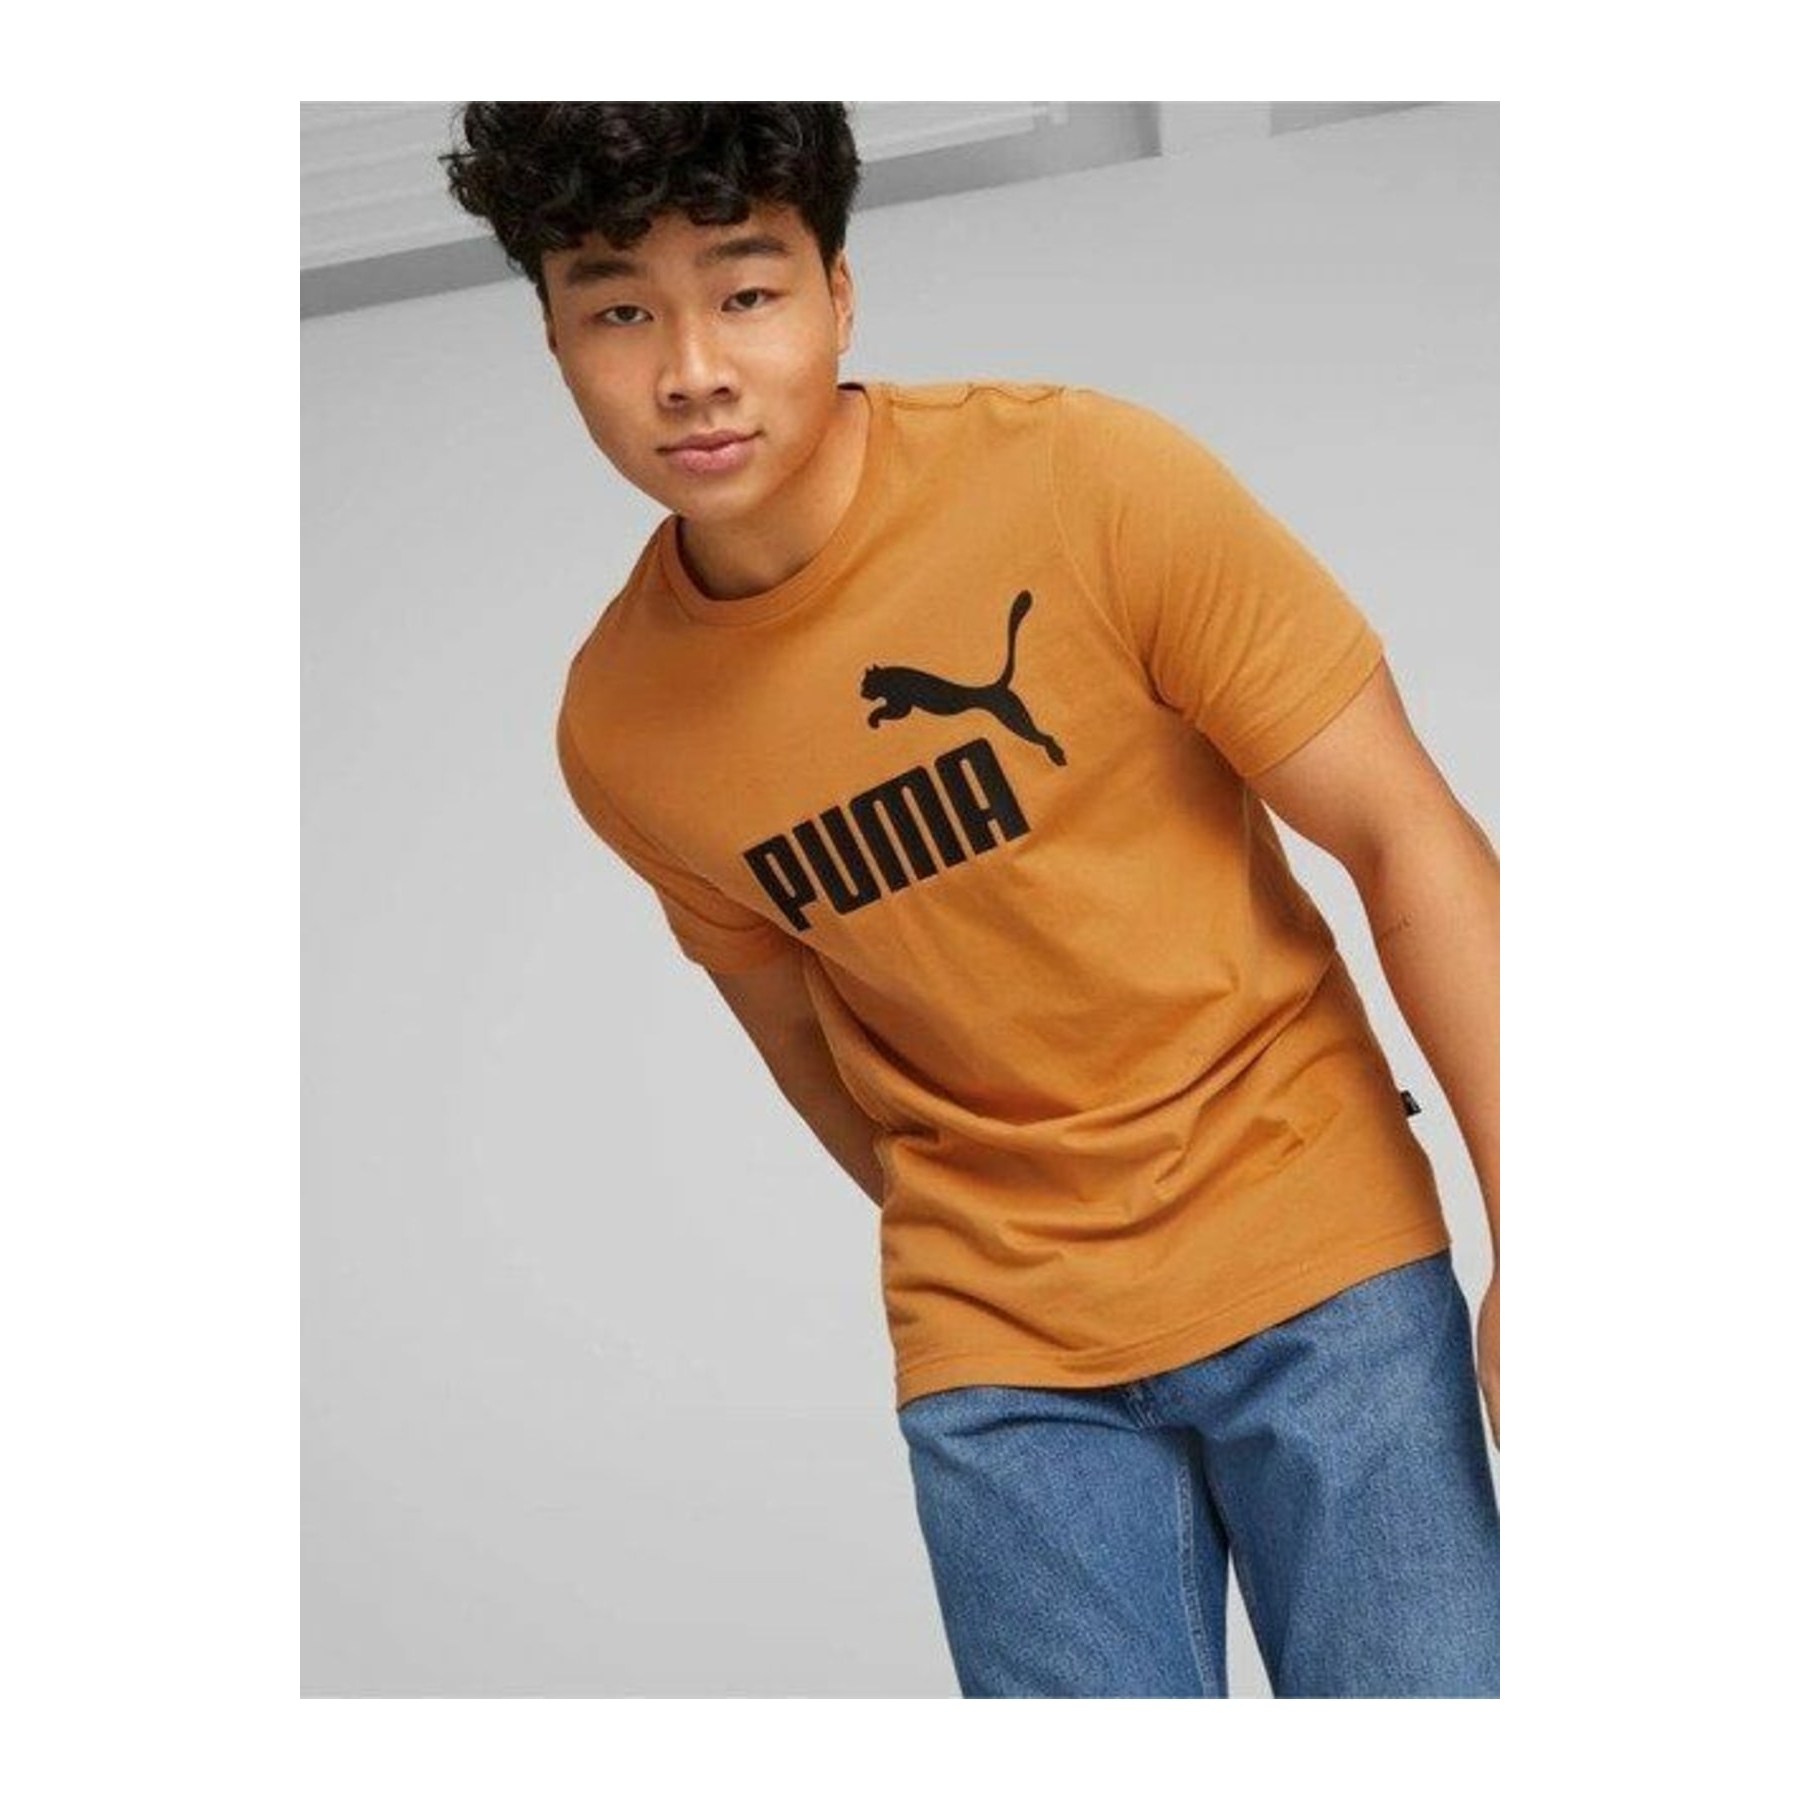 Puma Essential Logo Erkek Sarı Tişört (586667-27)